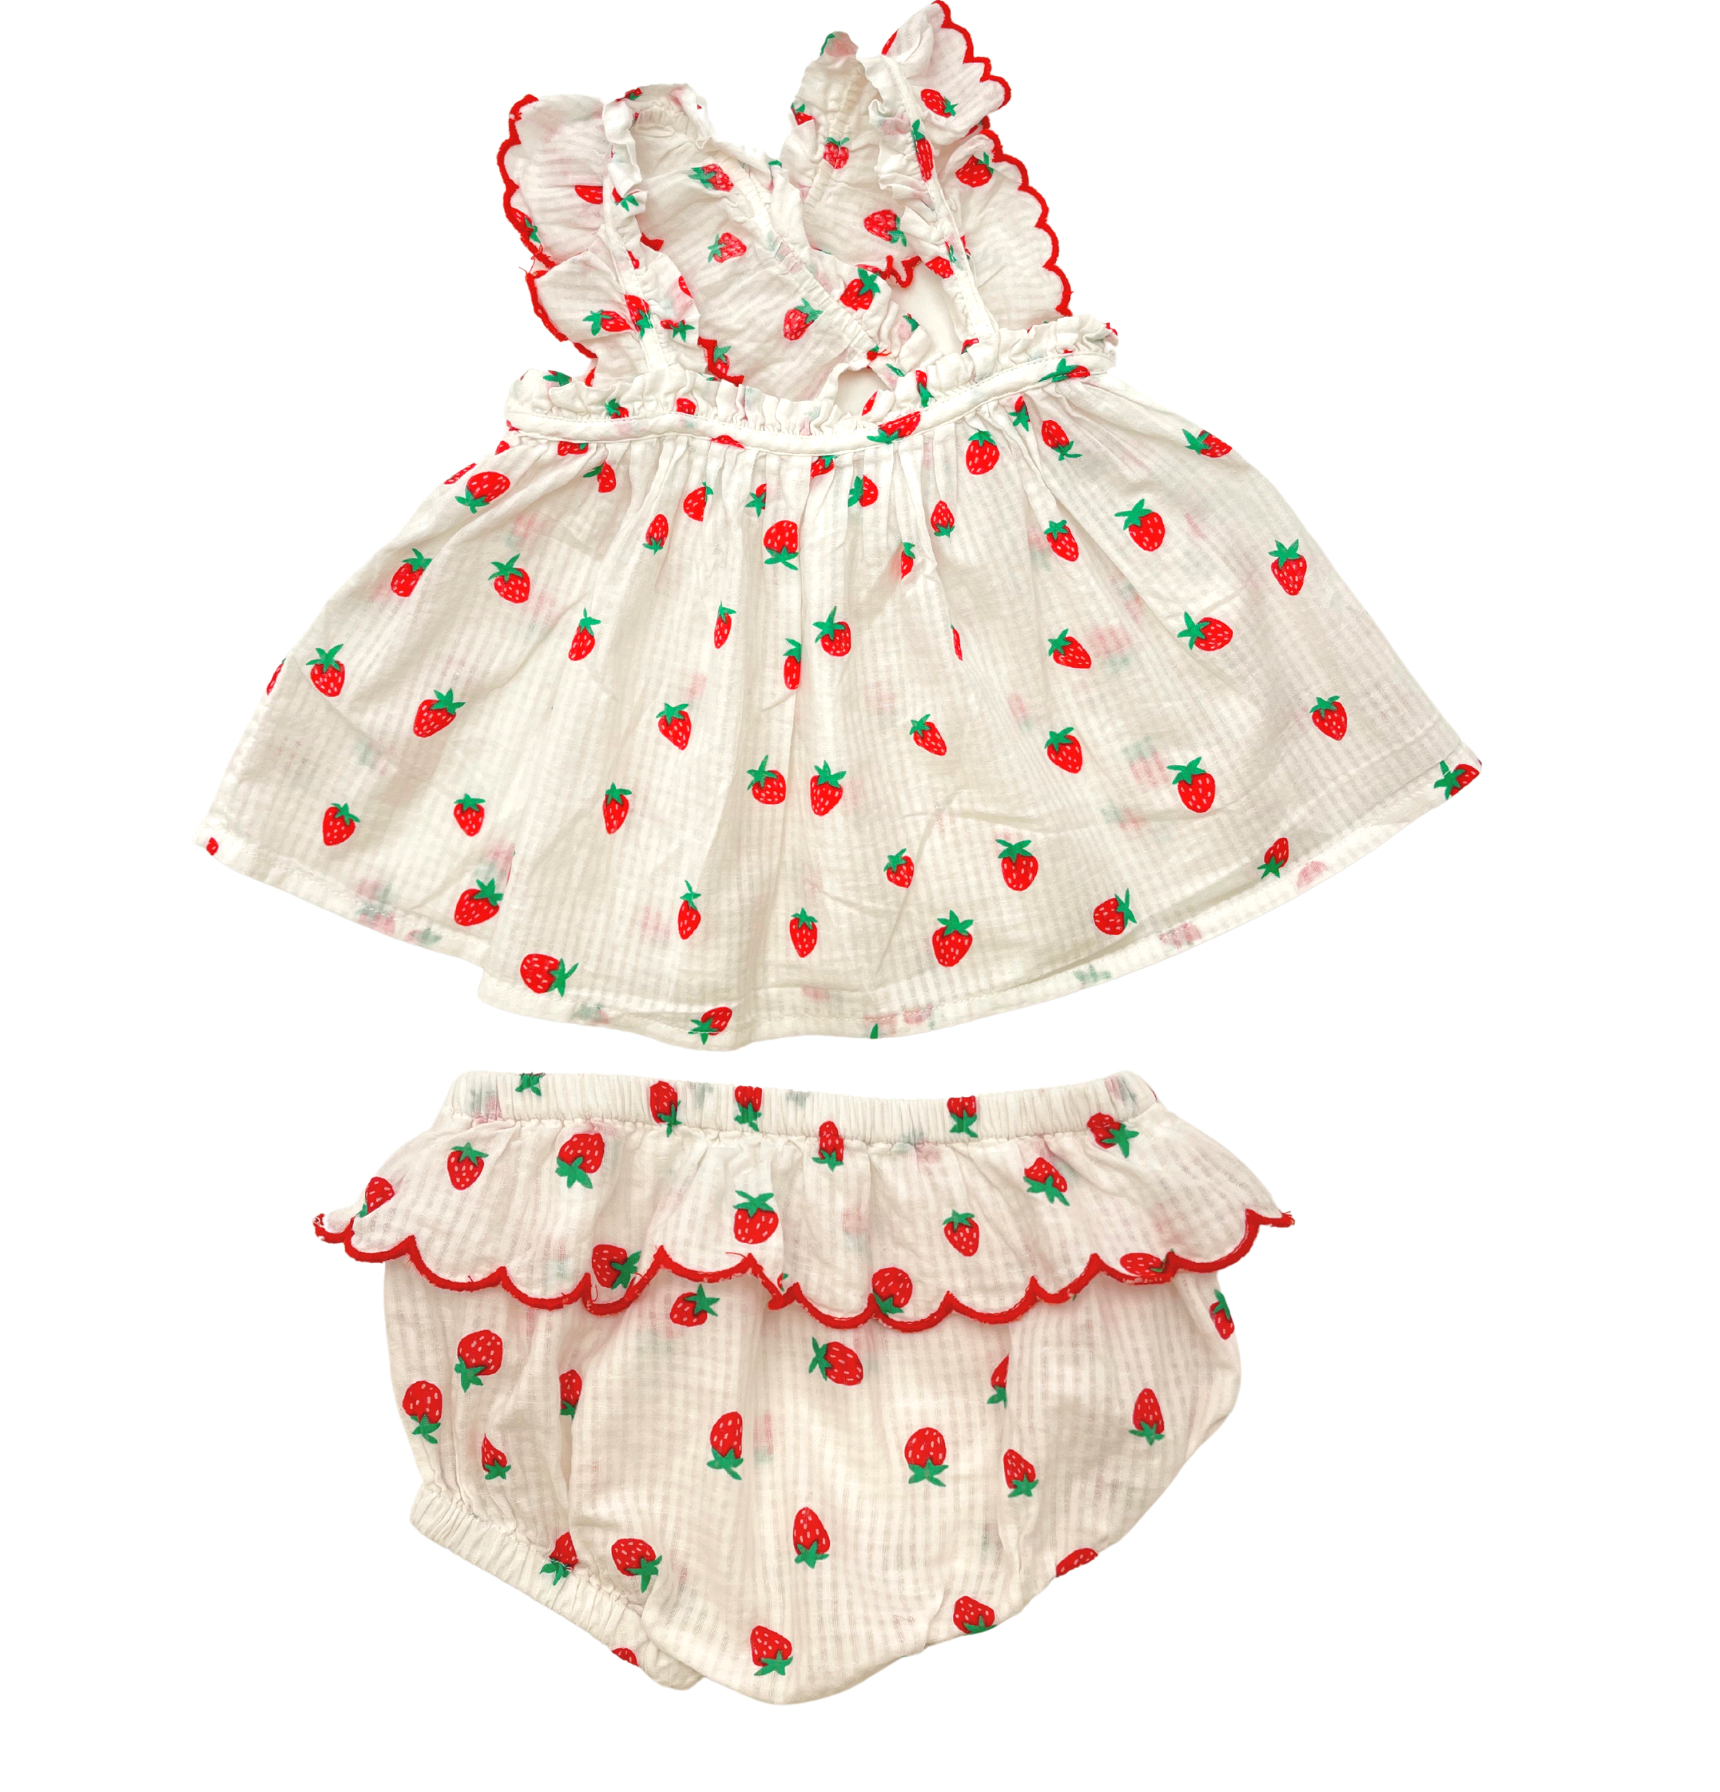 STELLA MCCARTNEY - Strawberry dress - 3 months